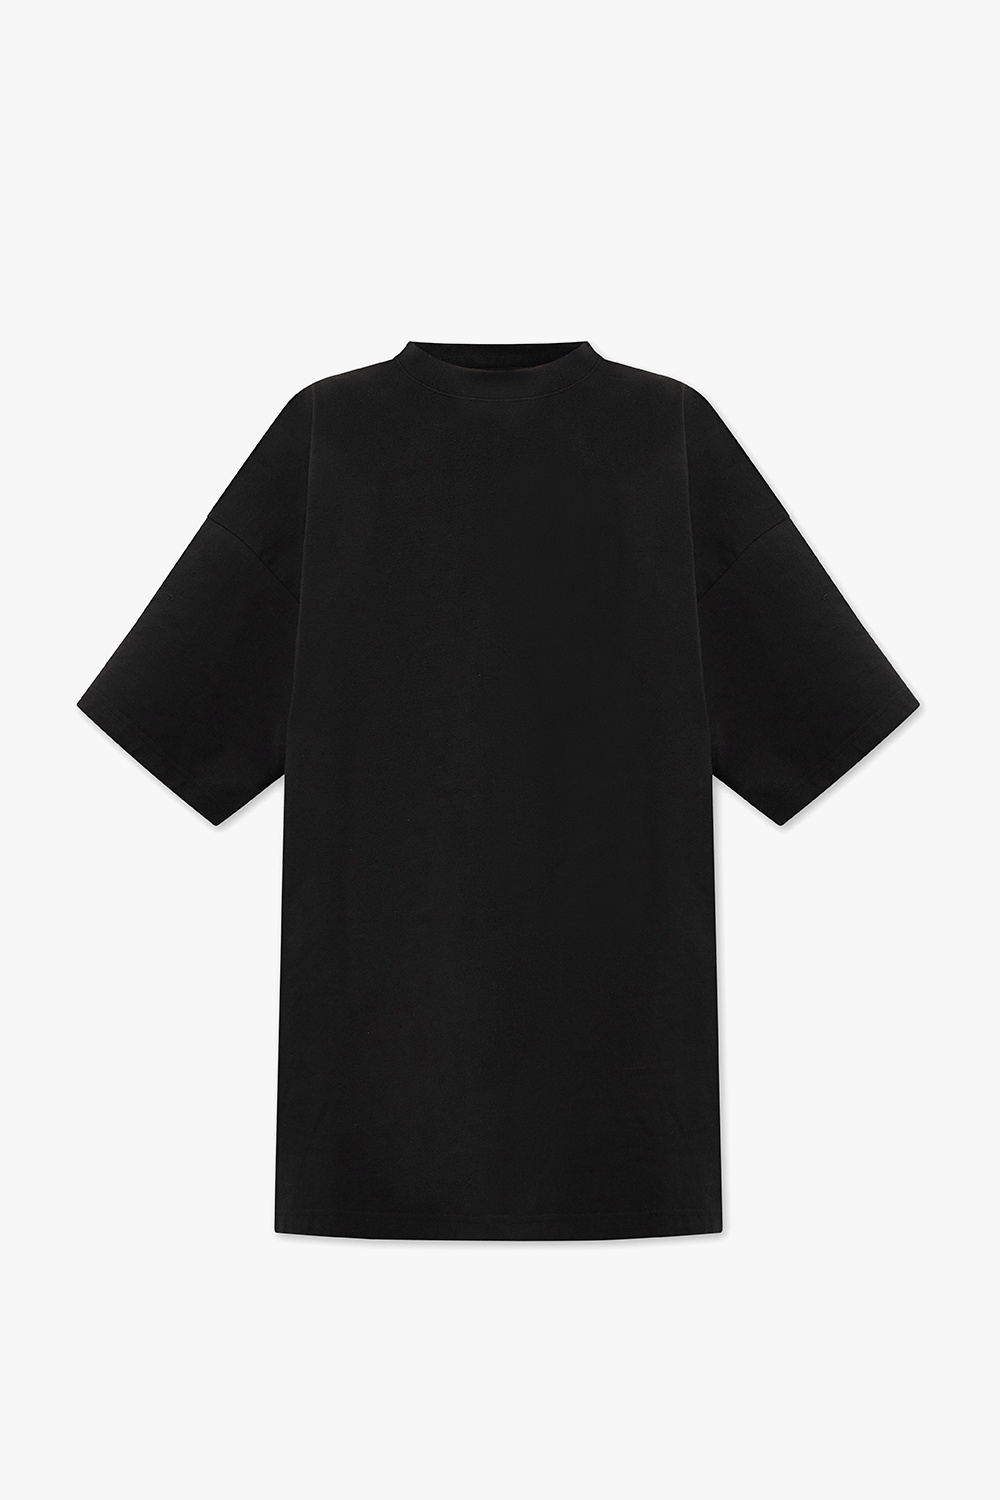 Balenciaga Karl Lagerfeld rhinestone monogram sweater dress